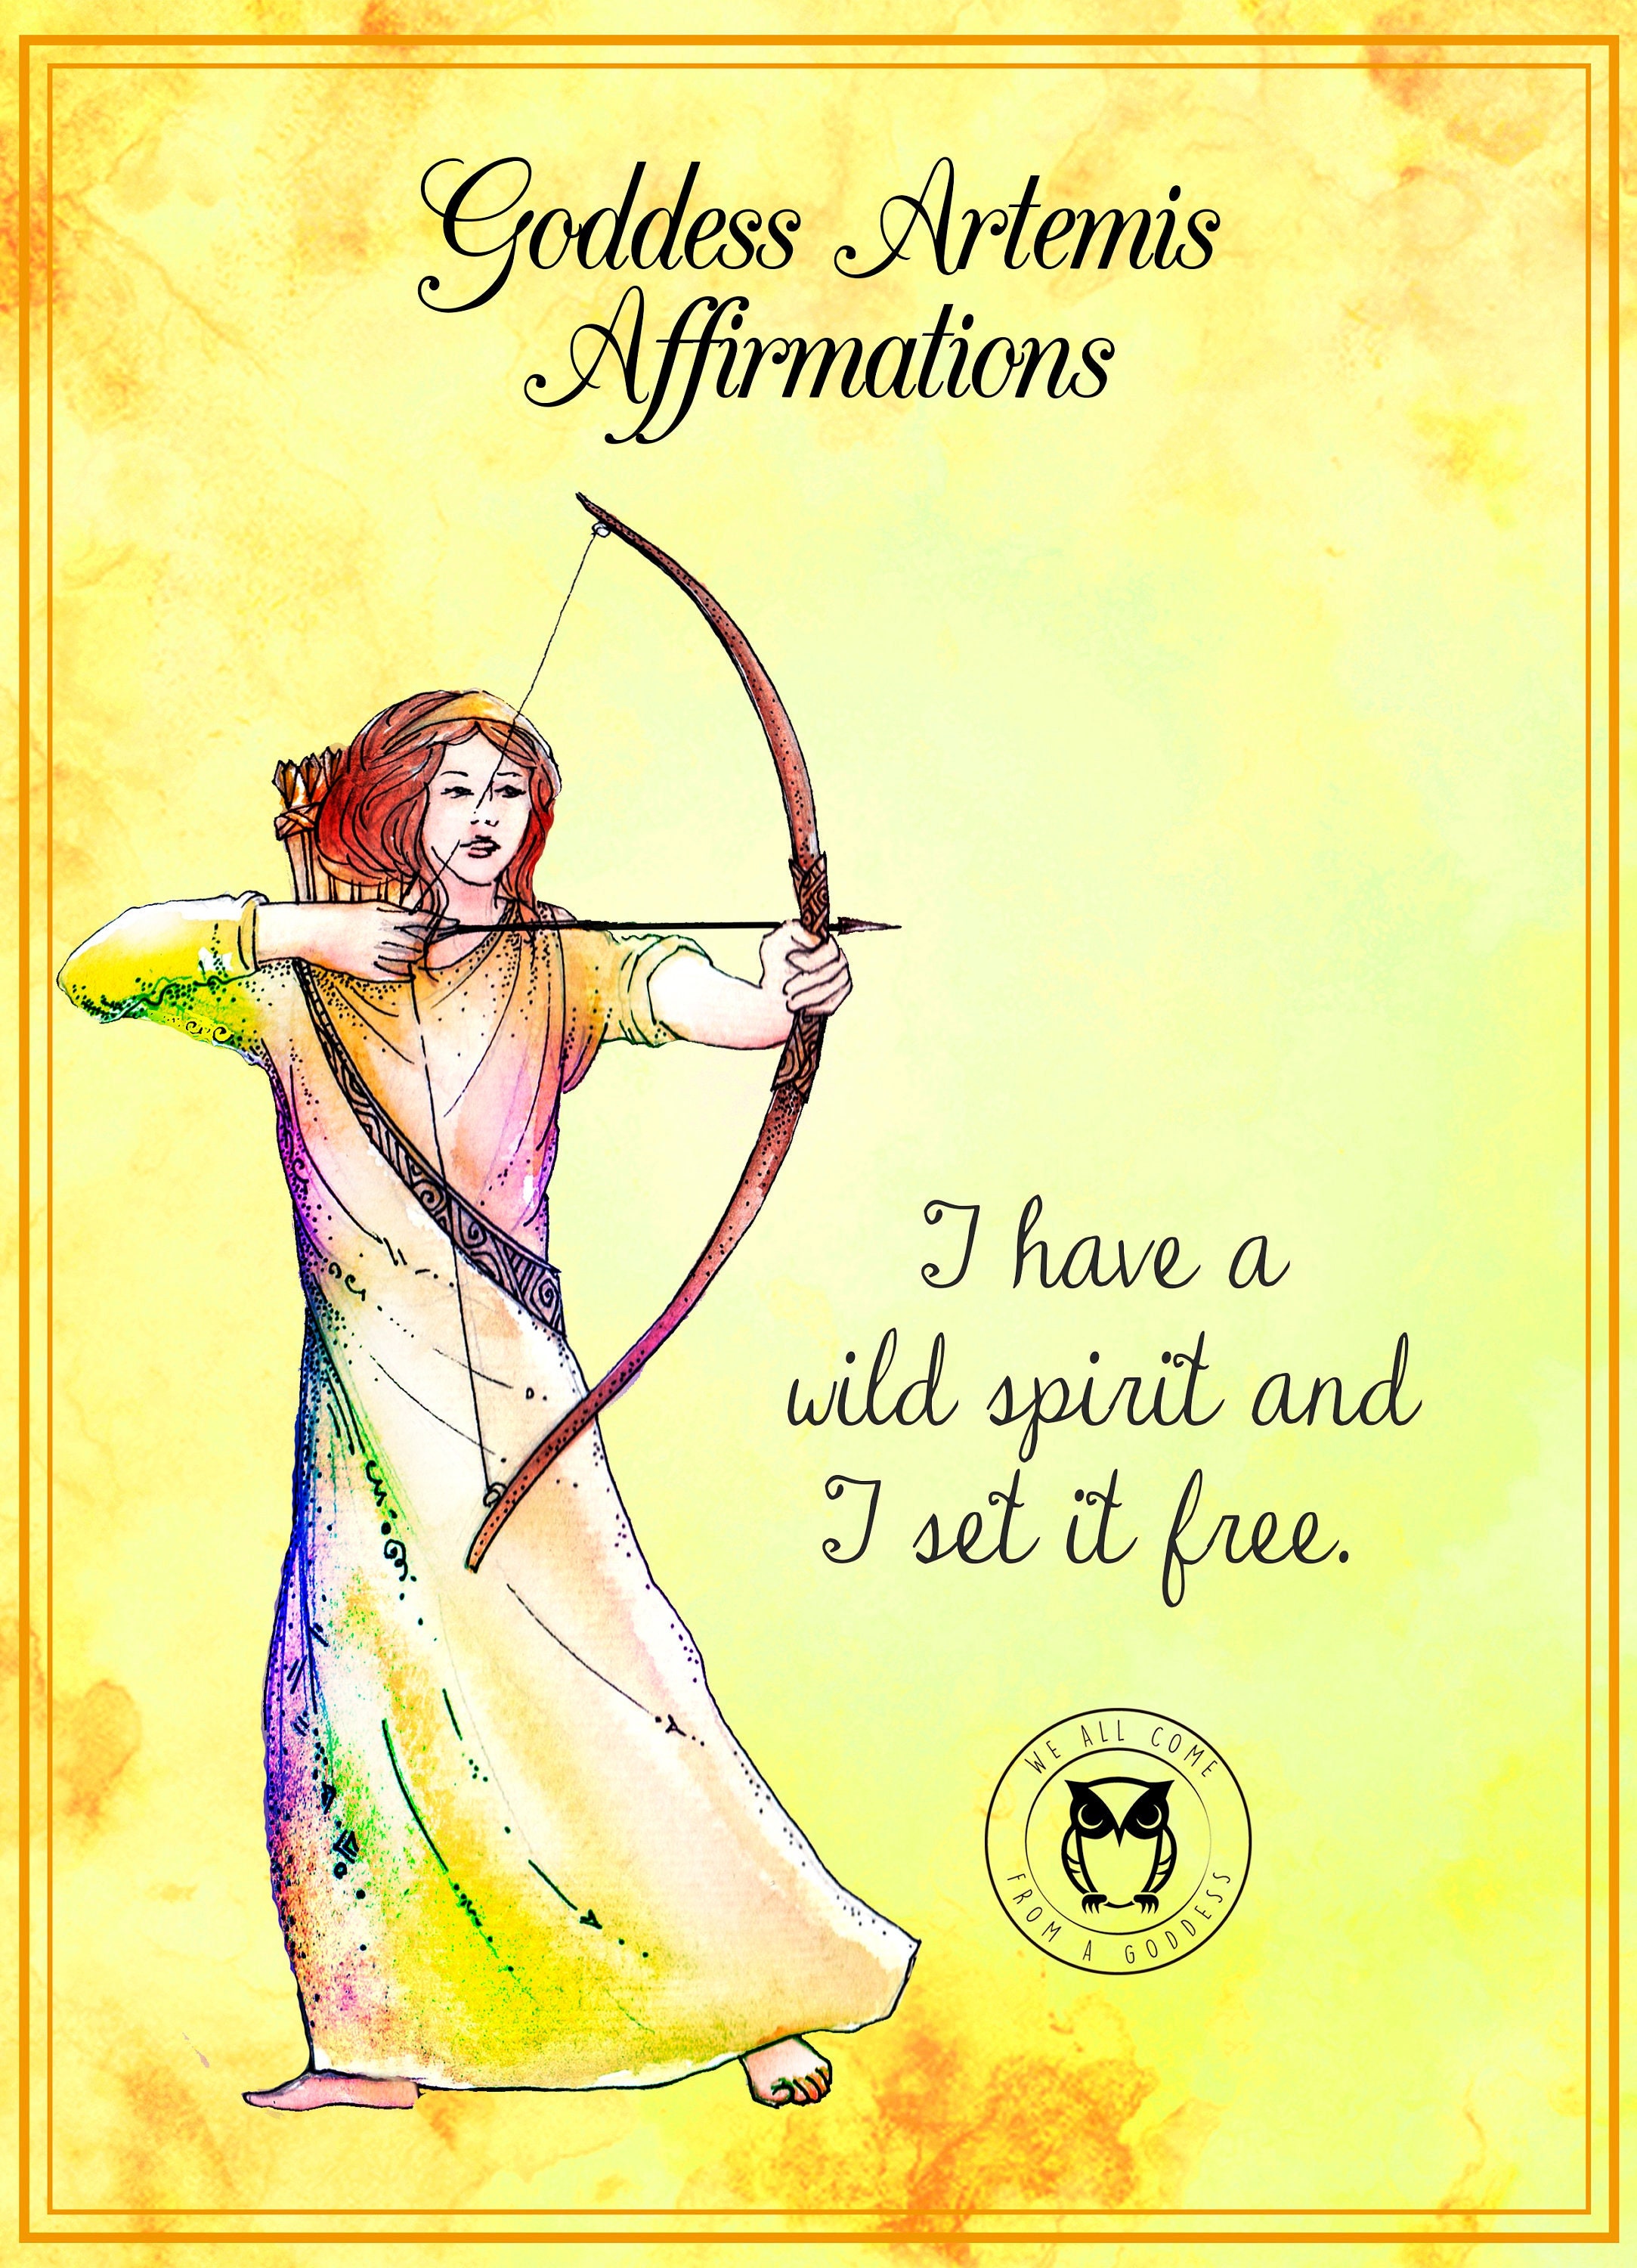 Artemis Goddess of Hunting Enamel Pin Greek Mythology Collection Book Pin  Badge Feminist Pin Literature Gift Dark Academia 